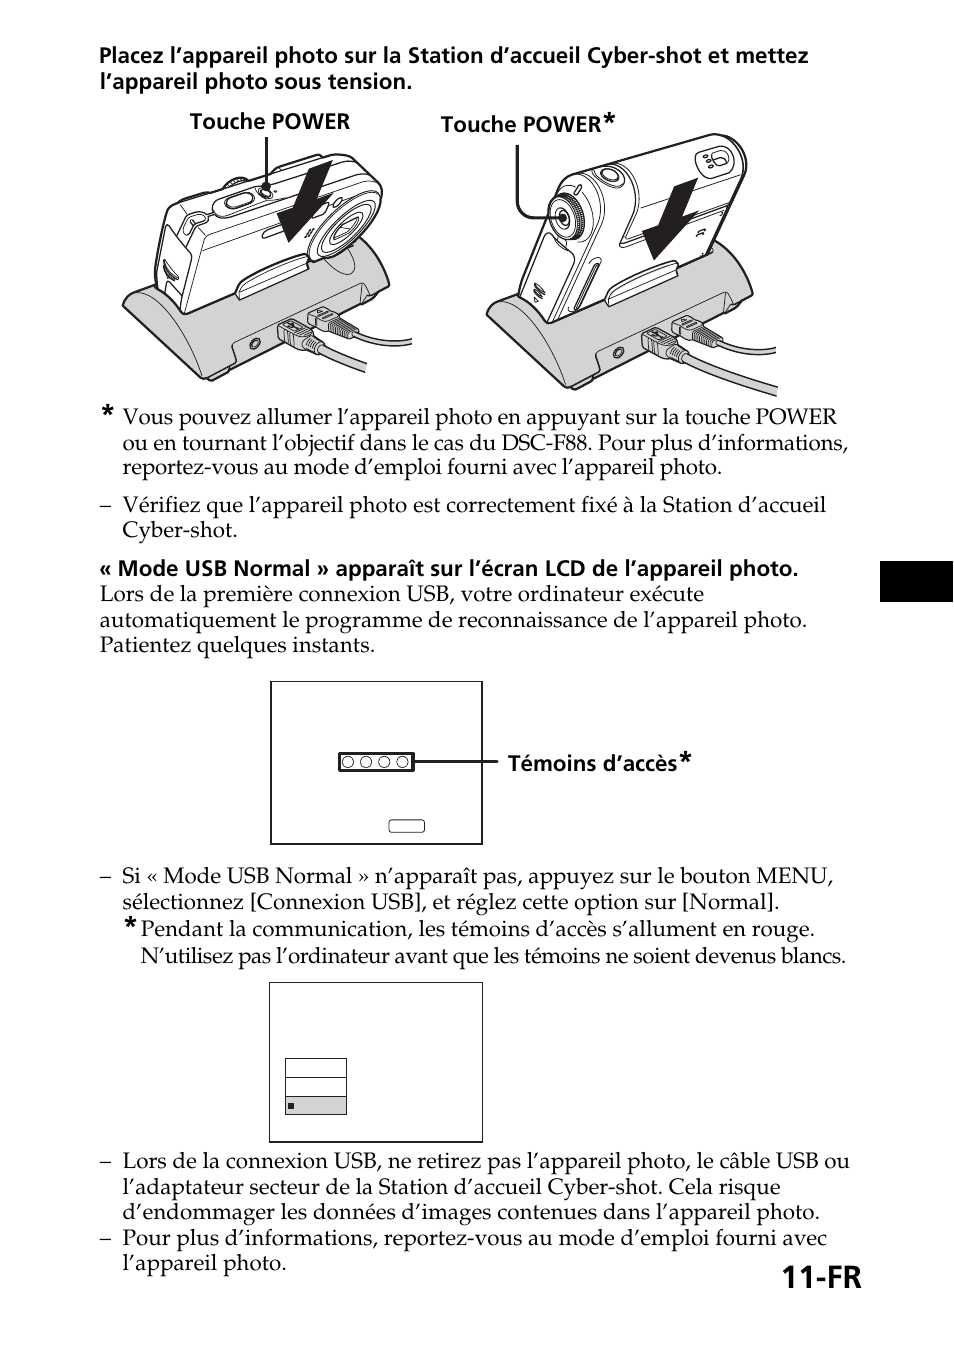 Sony CSS-FEB Manuel d'utilisation | Page 35 / 52